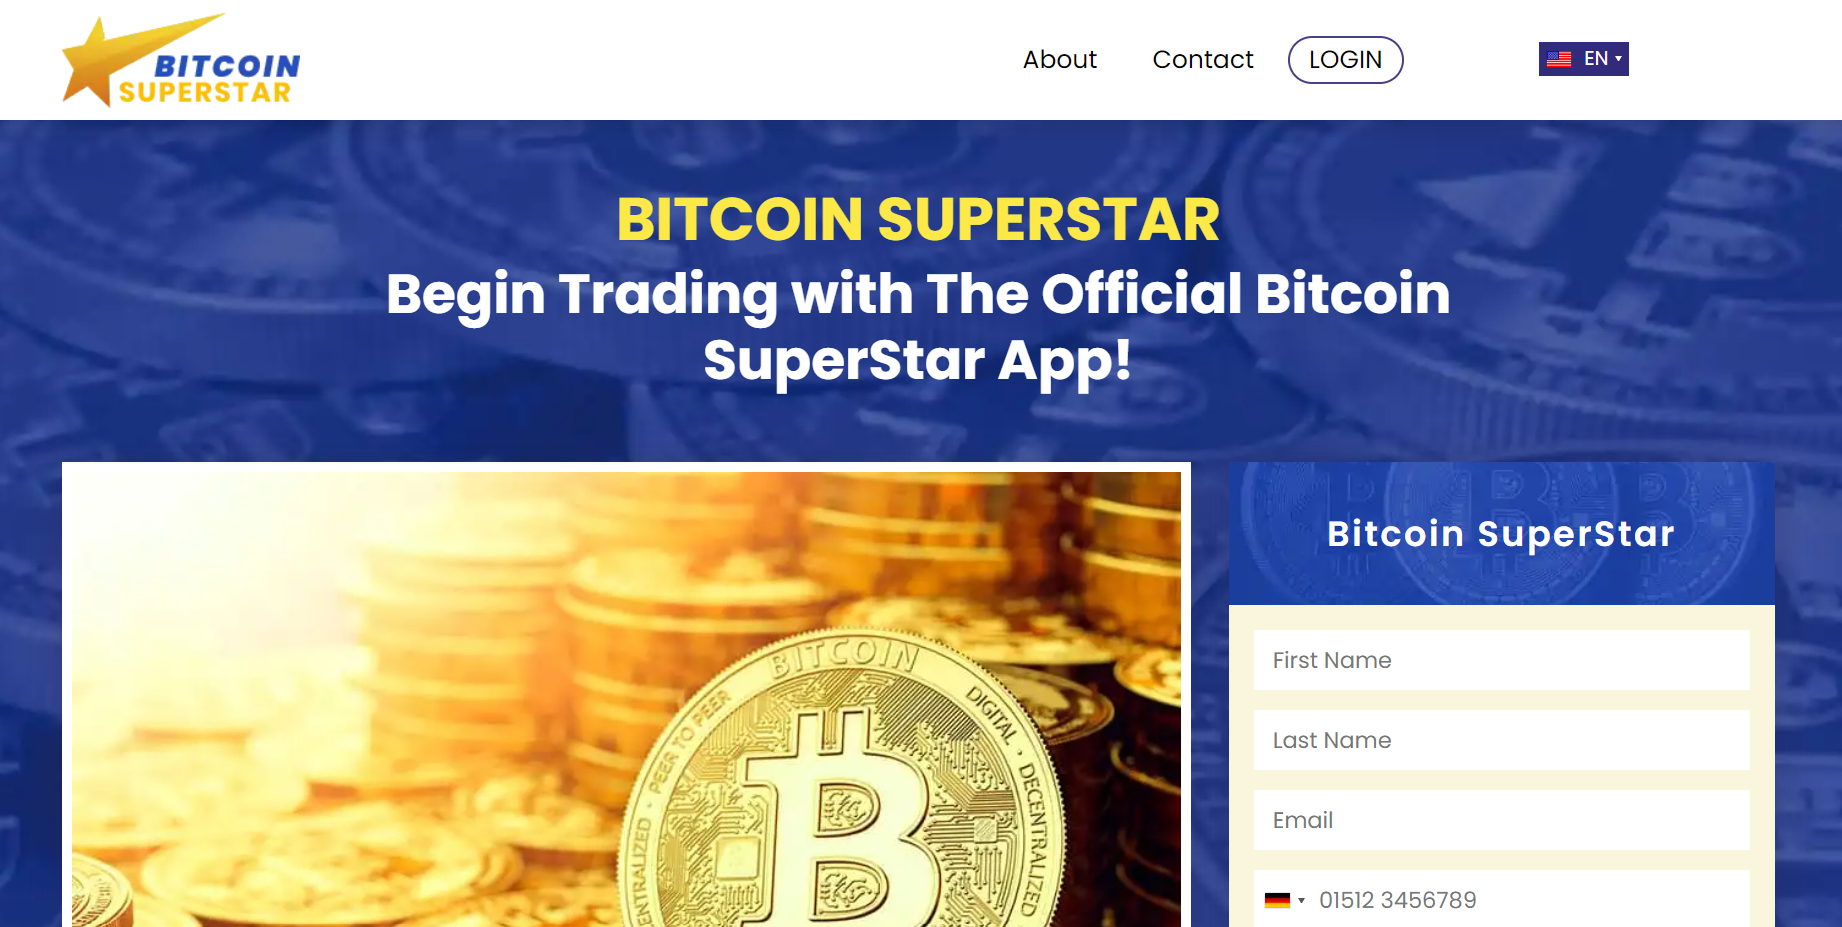 the official website of Bitcoin Superstar